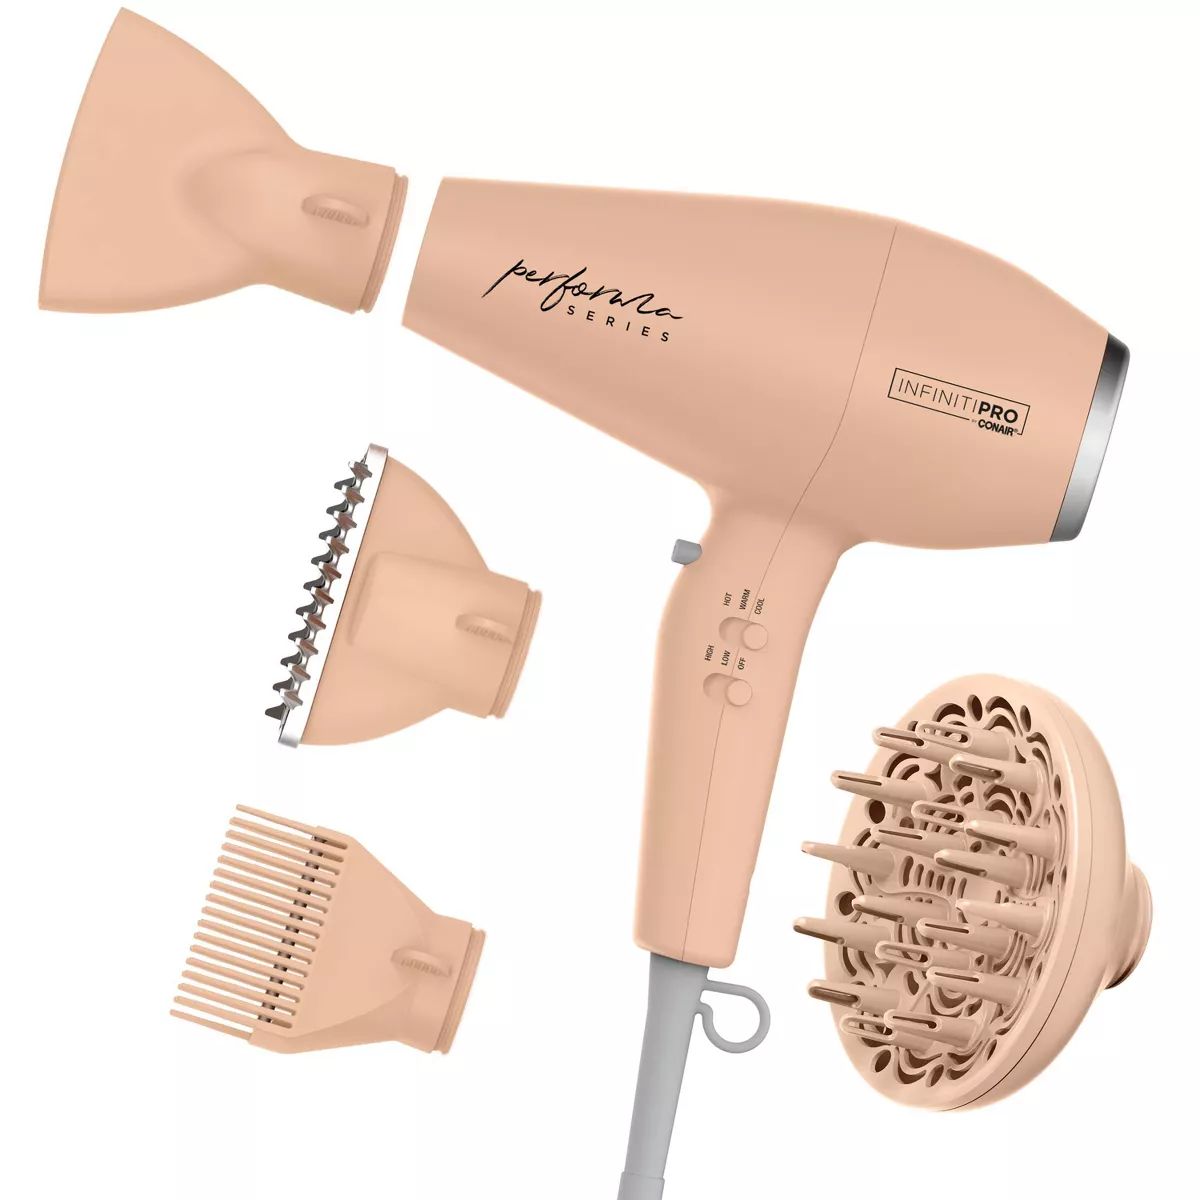 Conair InfinitiPRO Performa Series Ionic Ceramic Hair Dryer | Target